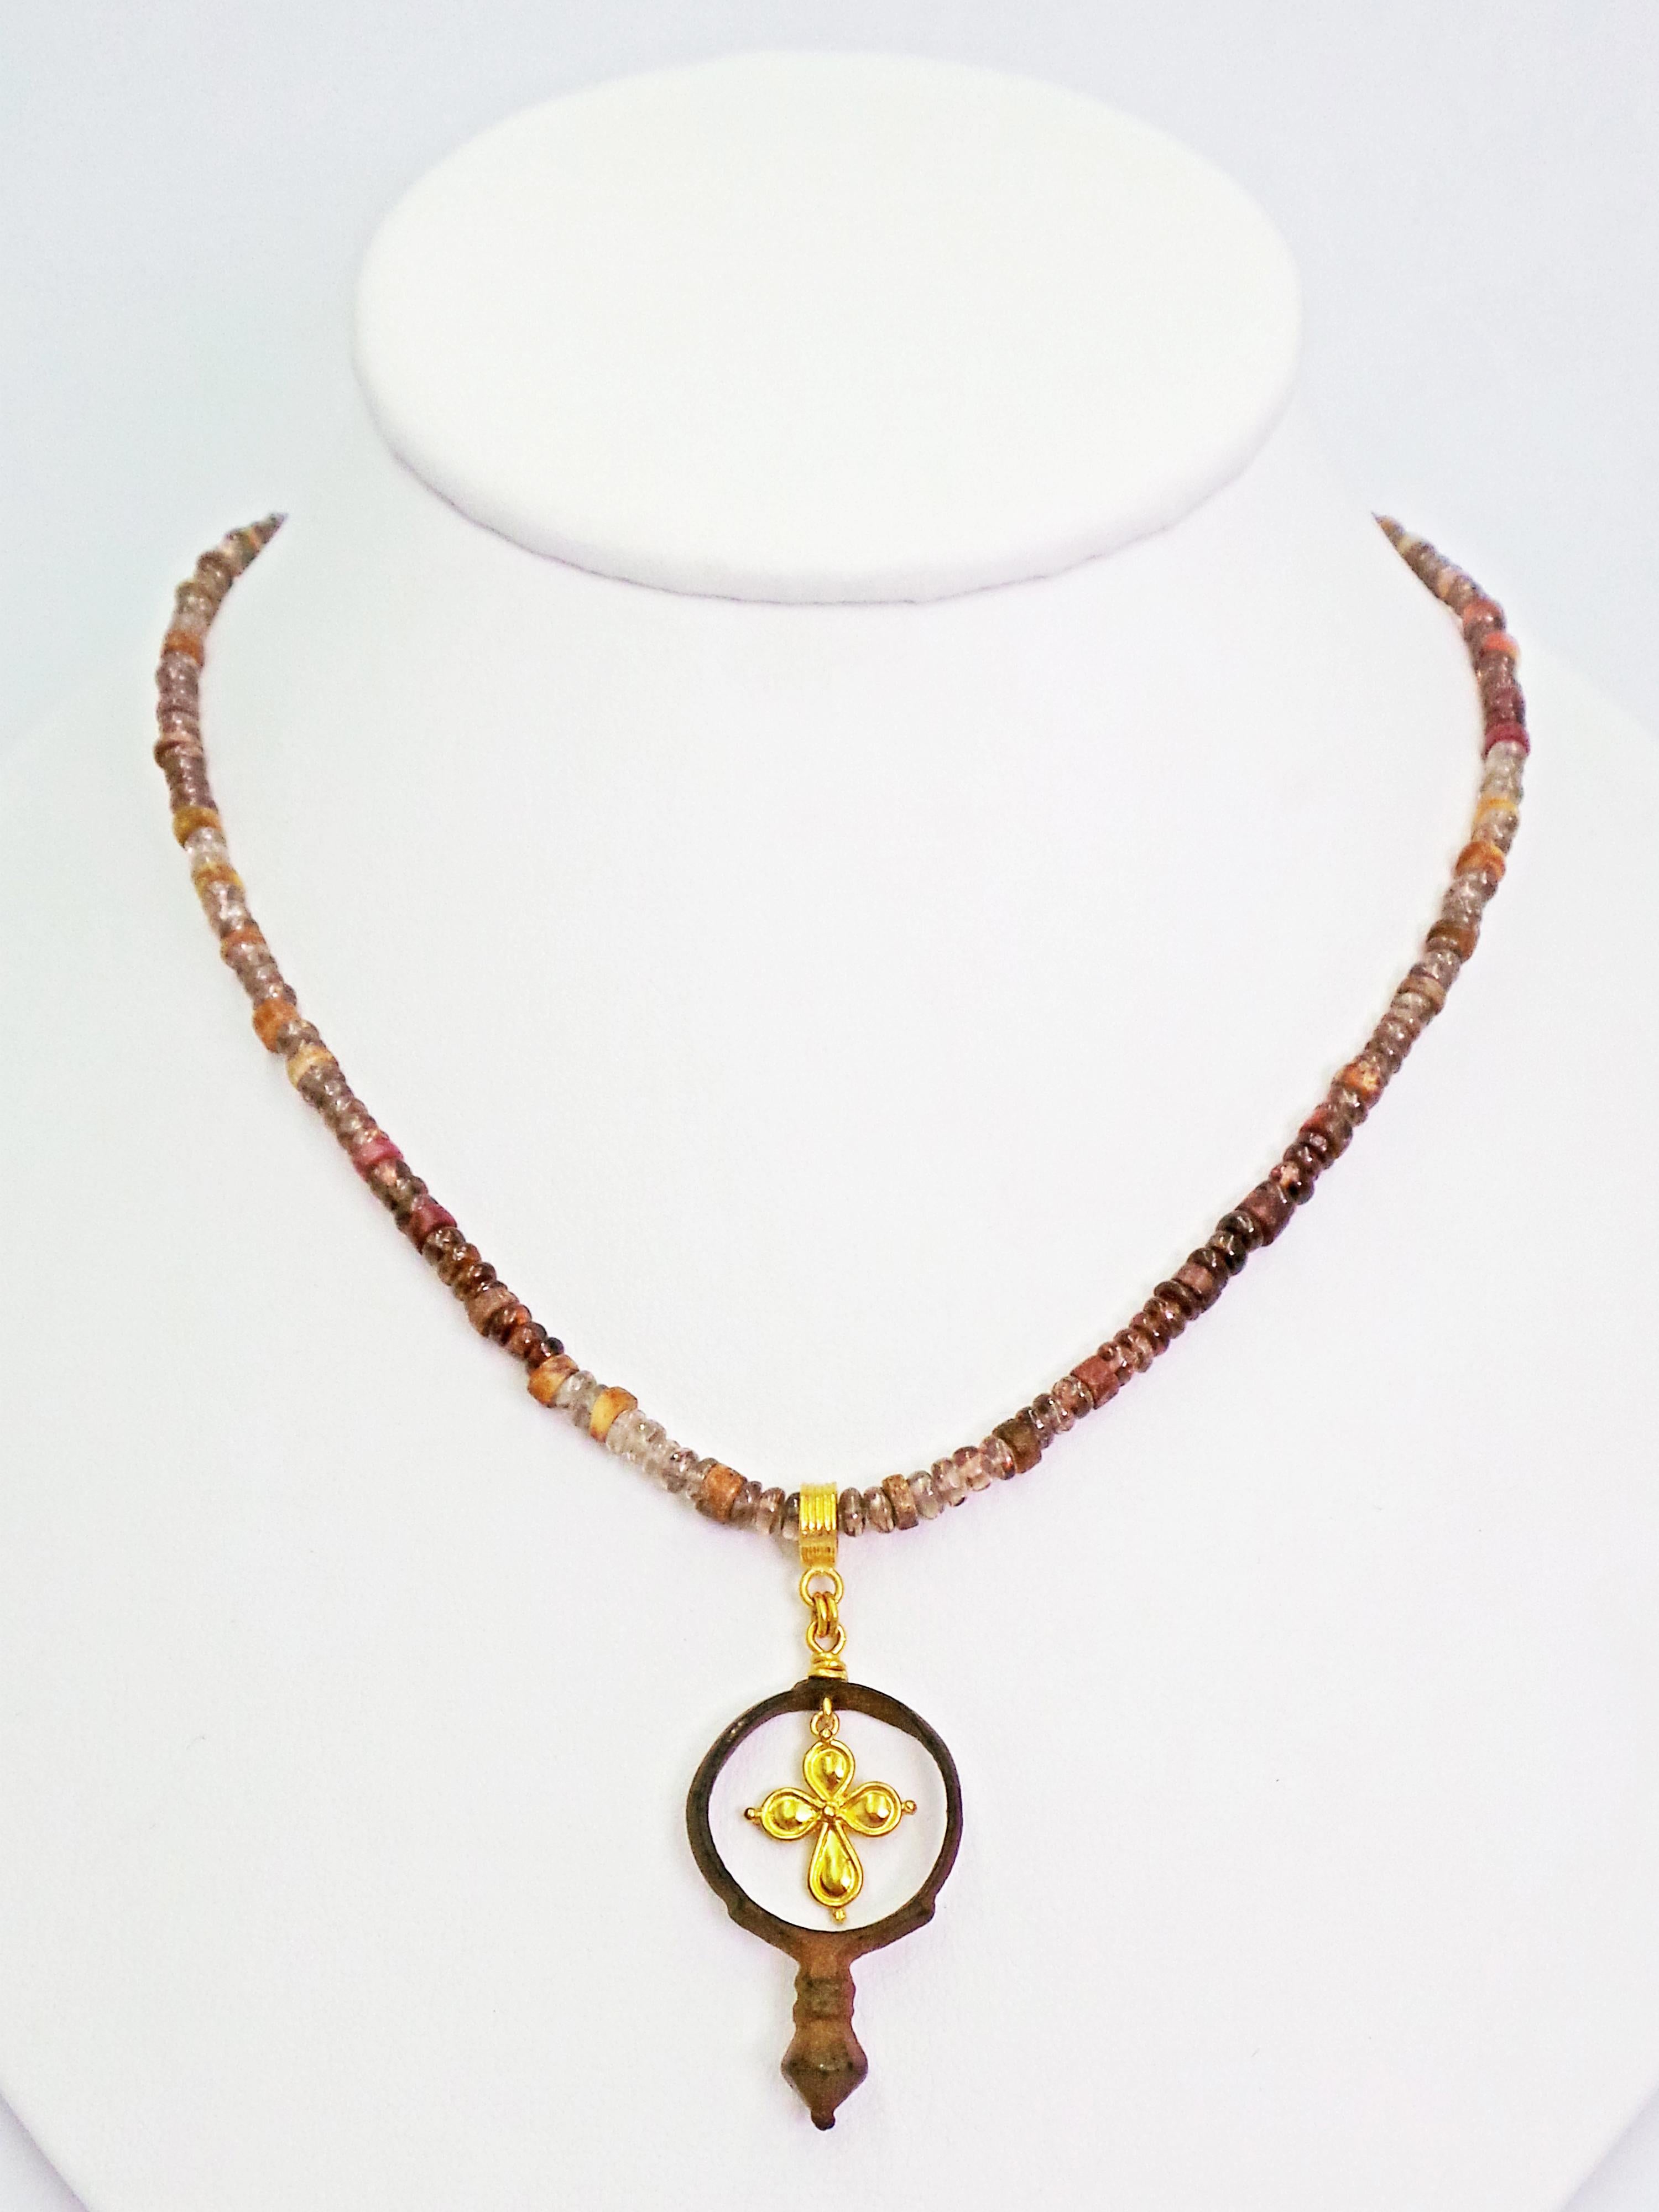 15th century necklace